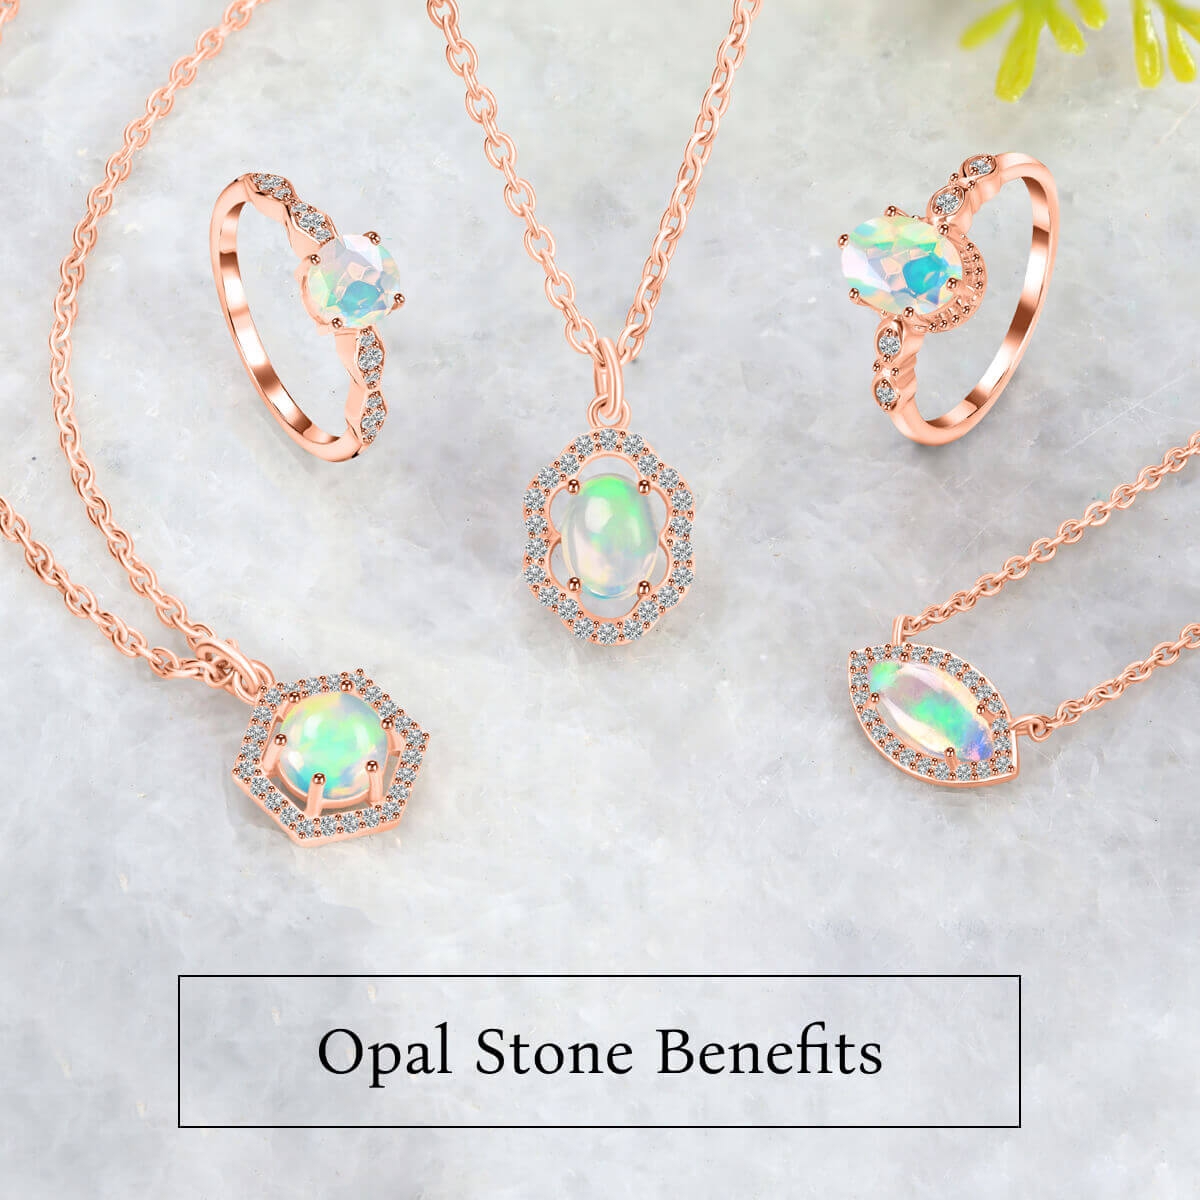 Benefits Of Wearing Opal